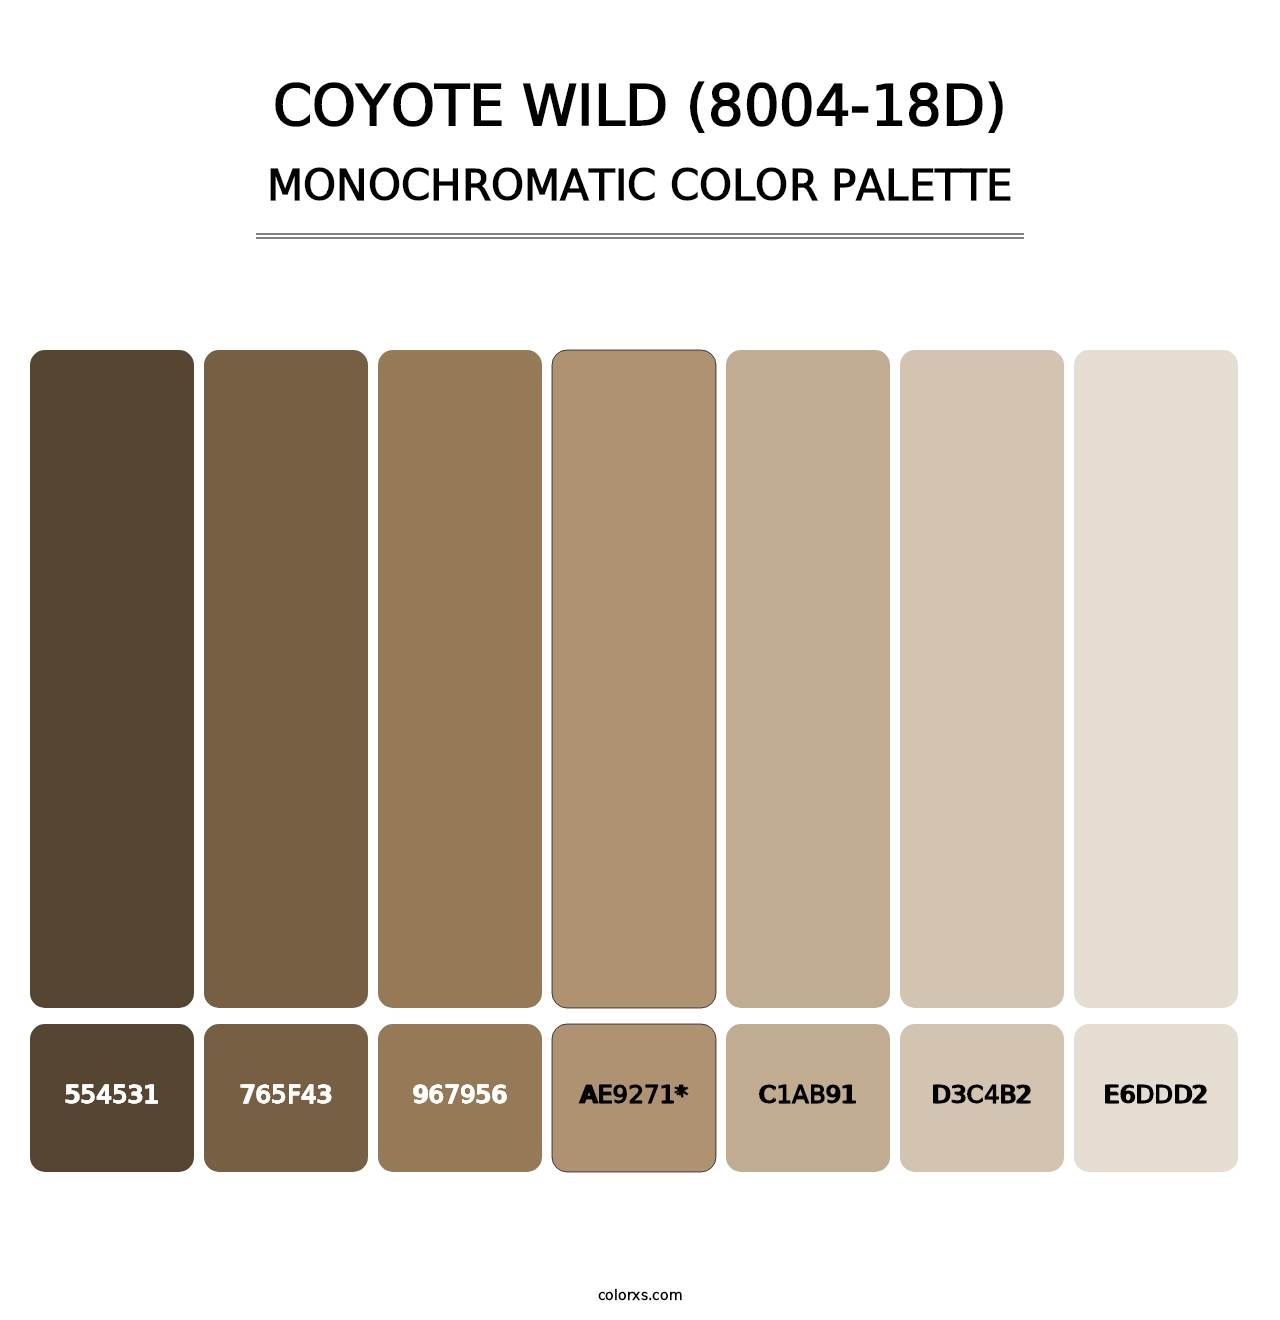 Coyote Wild (8004-18D) - Monochromatic Color Palette